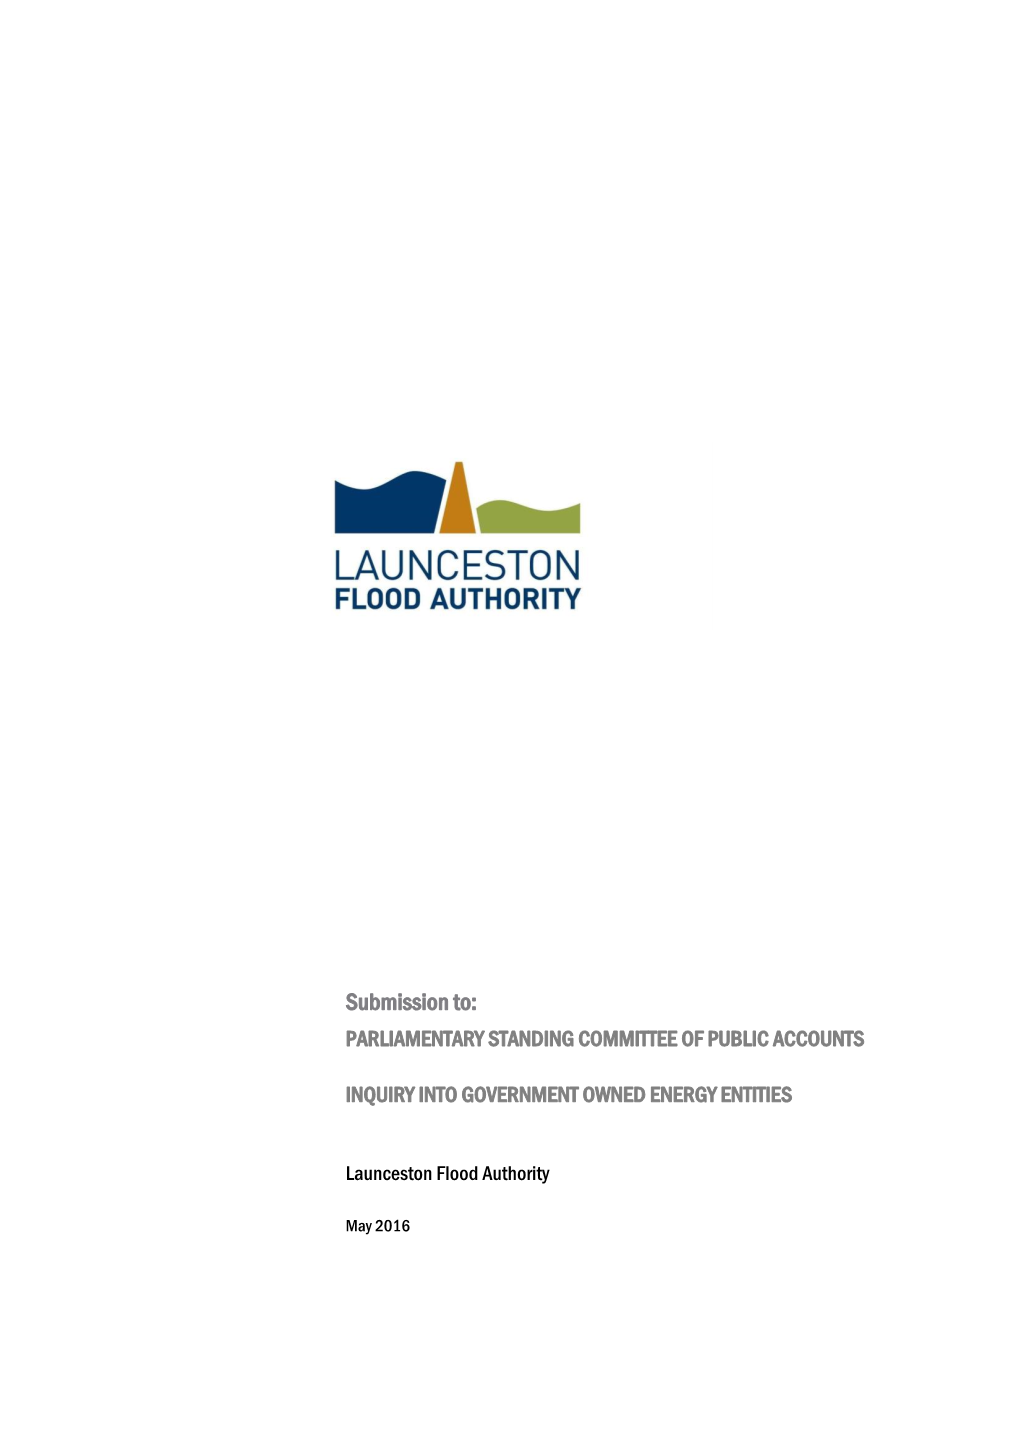 8. Launceston Flood Authority